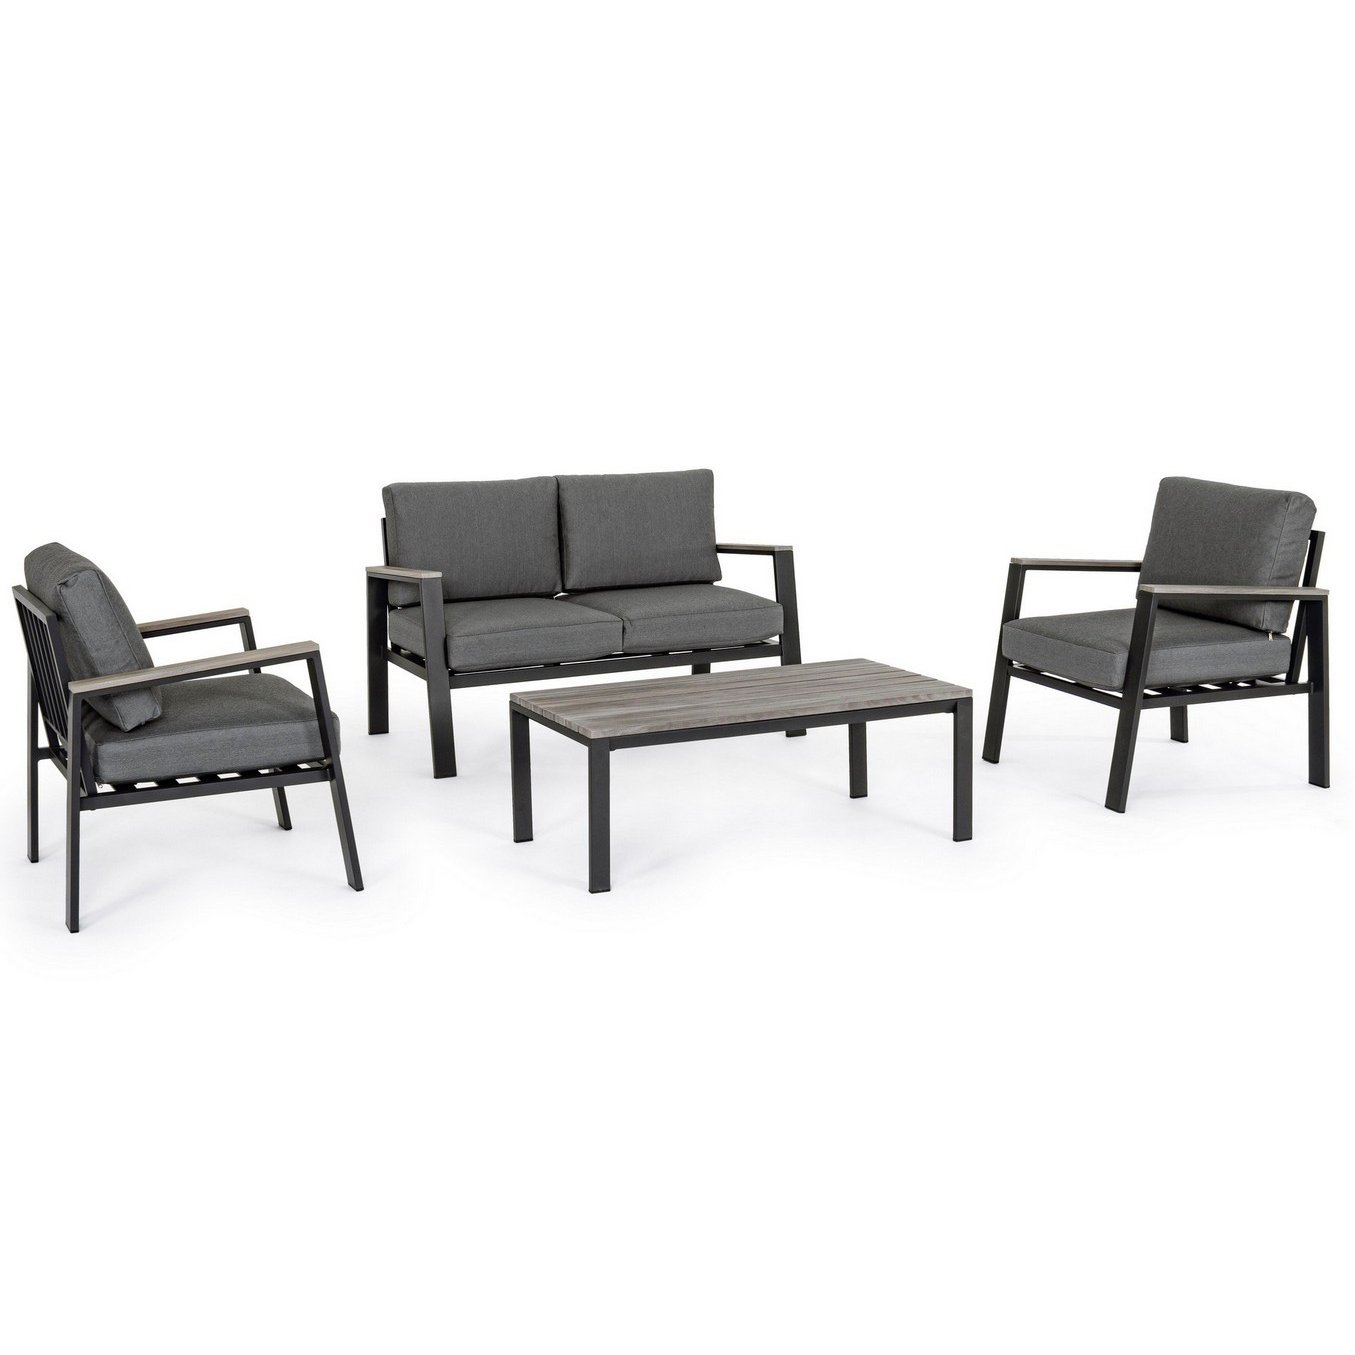 Комплект мебели Bizzotto Belmar 4 предмета, цвет серый, размер 132х75х84 см - фото 1